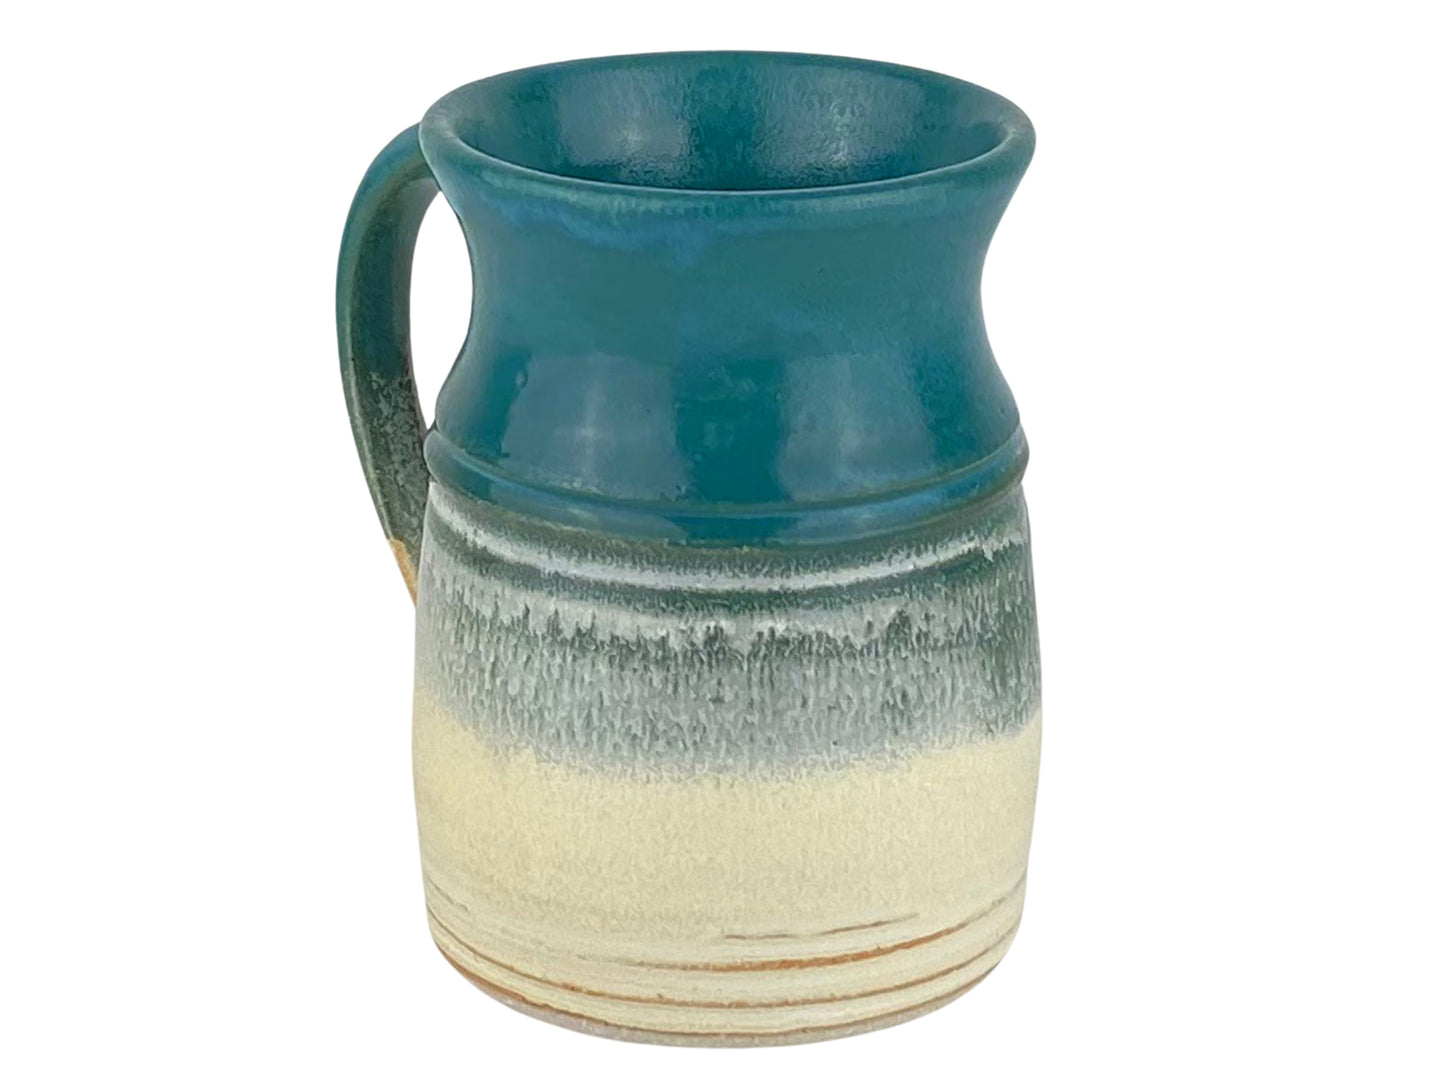 16 oz. Handmade Stoneware Mug